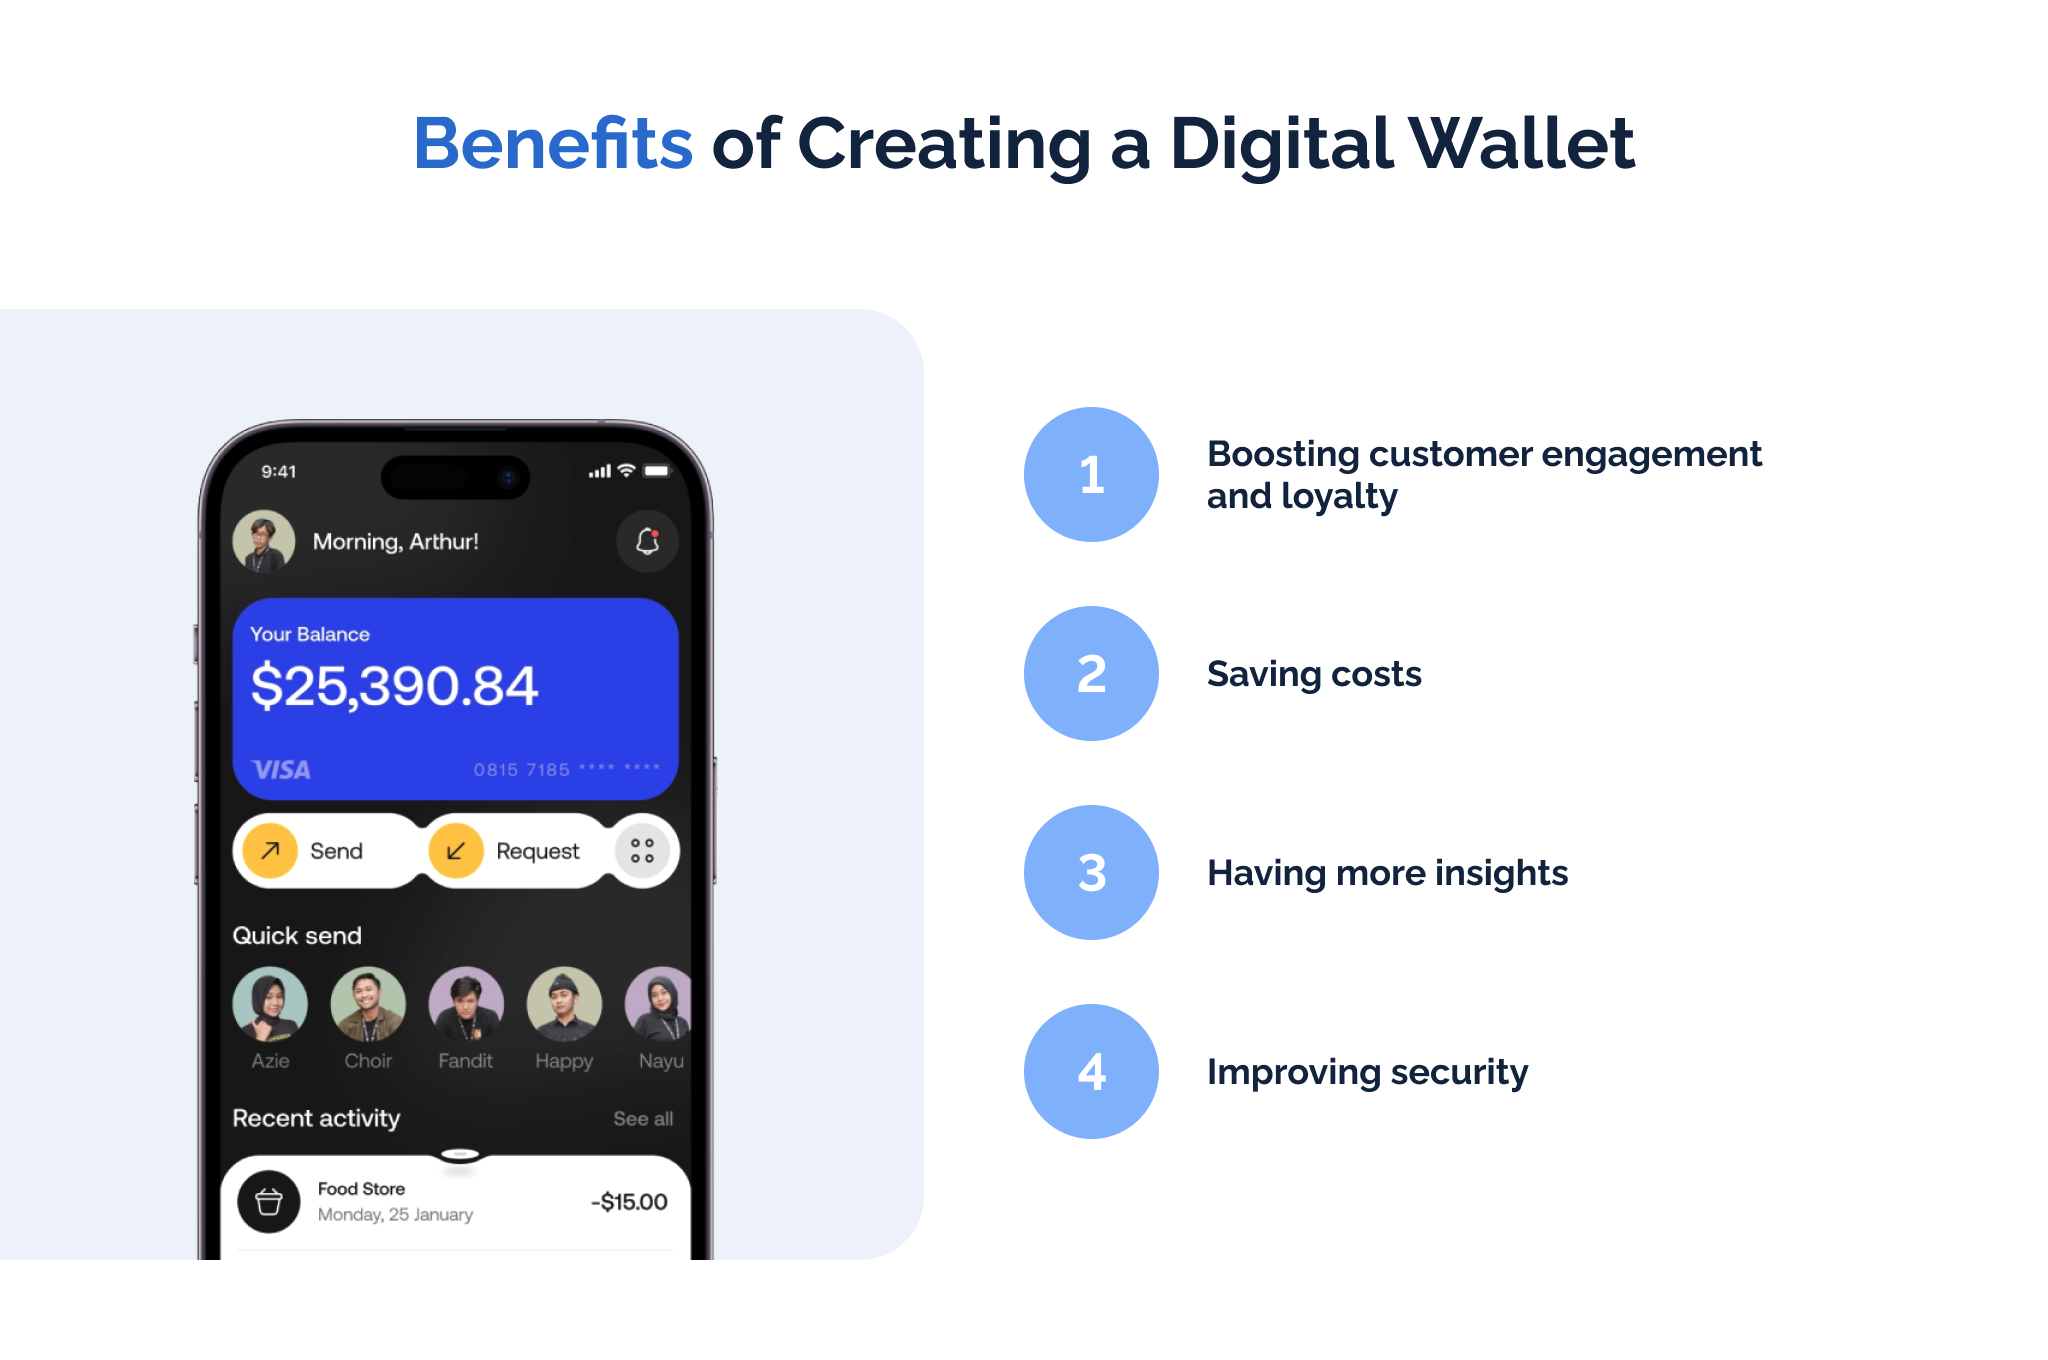 Benefits of creating a digital wallet